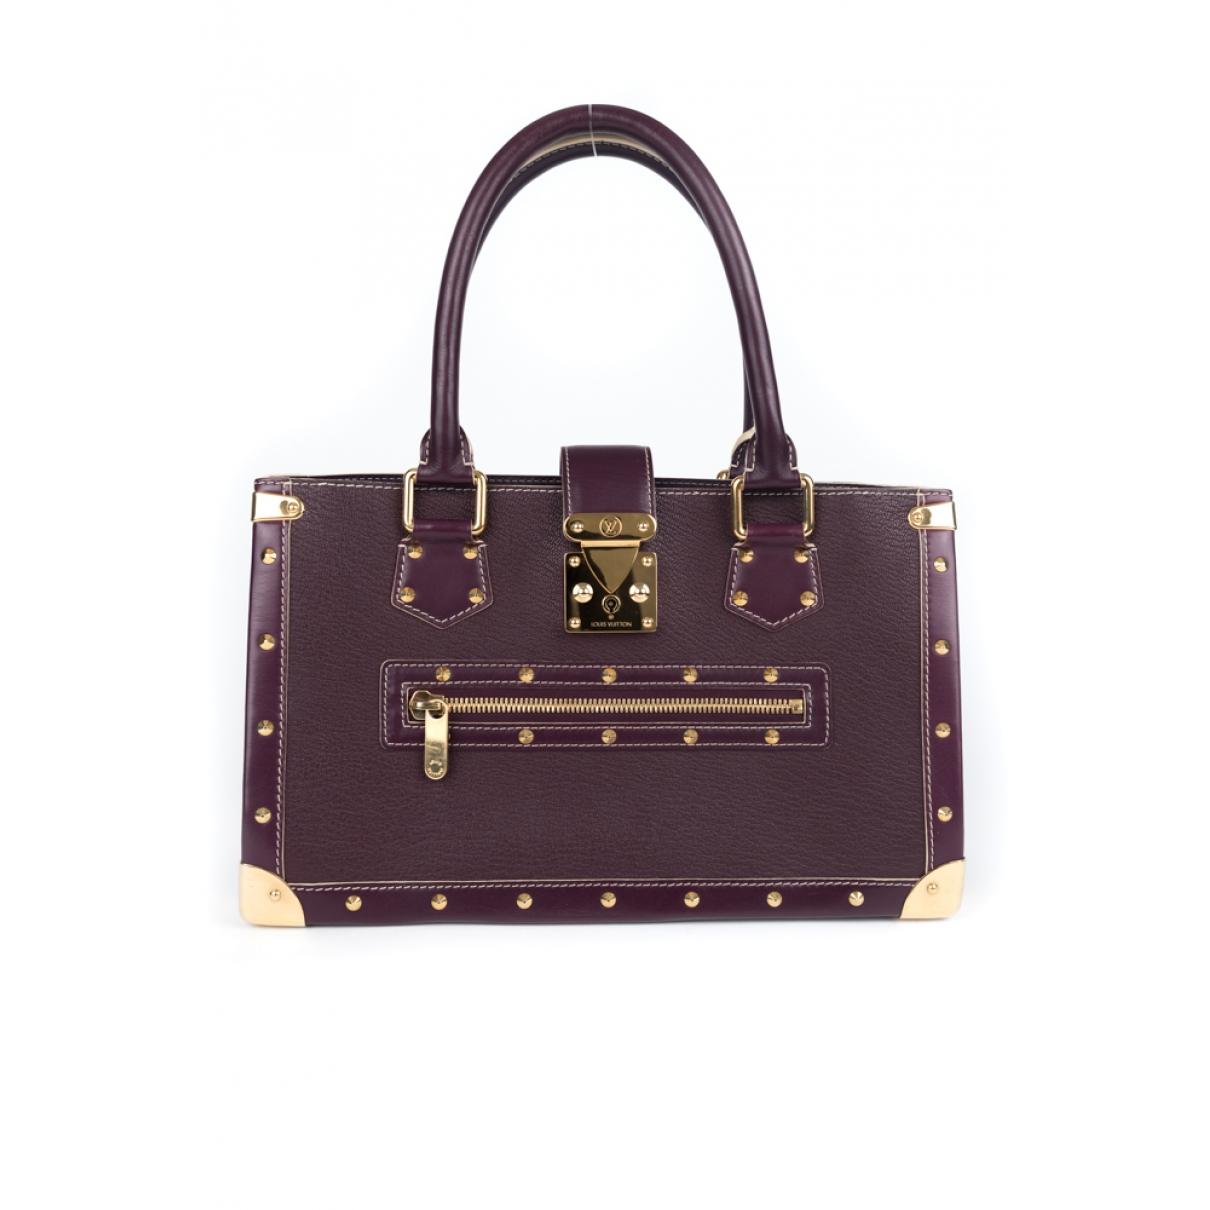 Lyst - Louis Vuitton Pre-owned Le Fabuleux Purple Leather Handbags in Purple